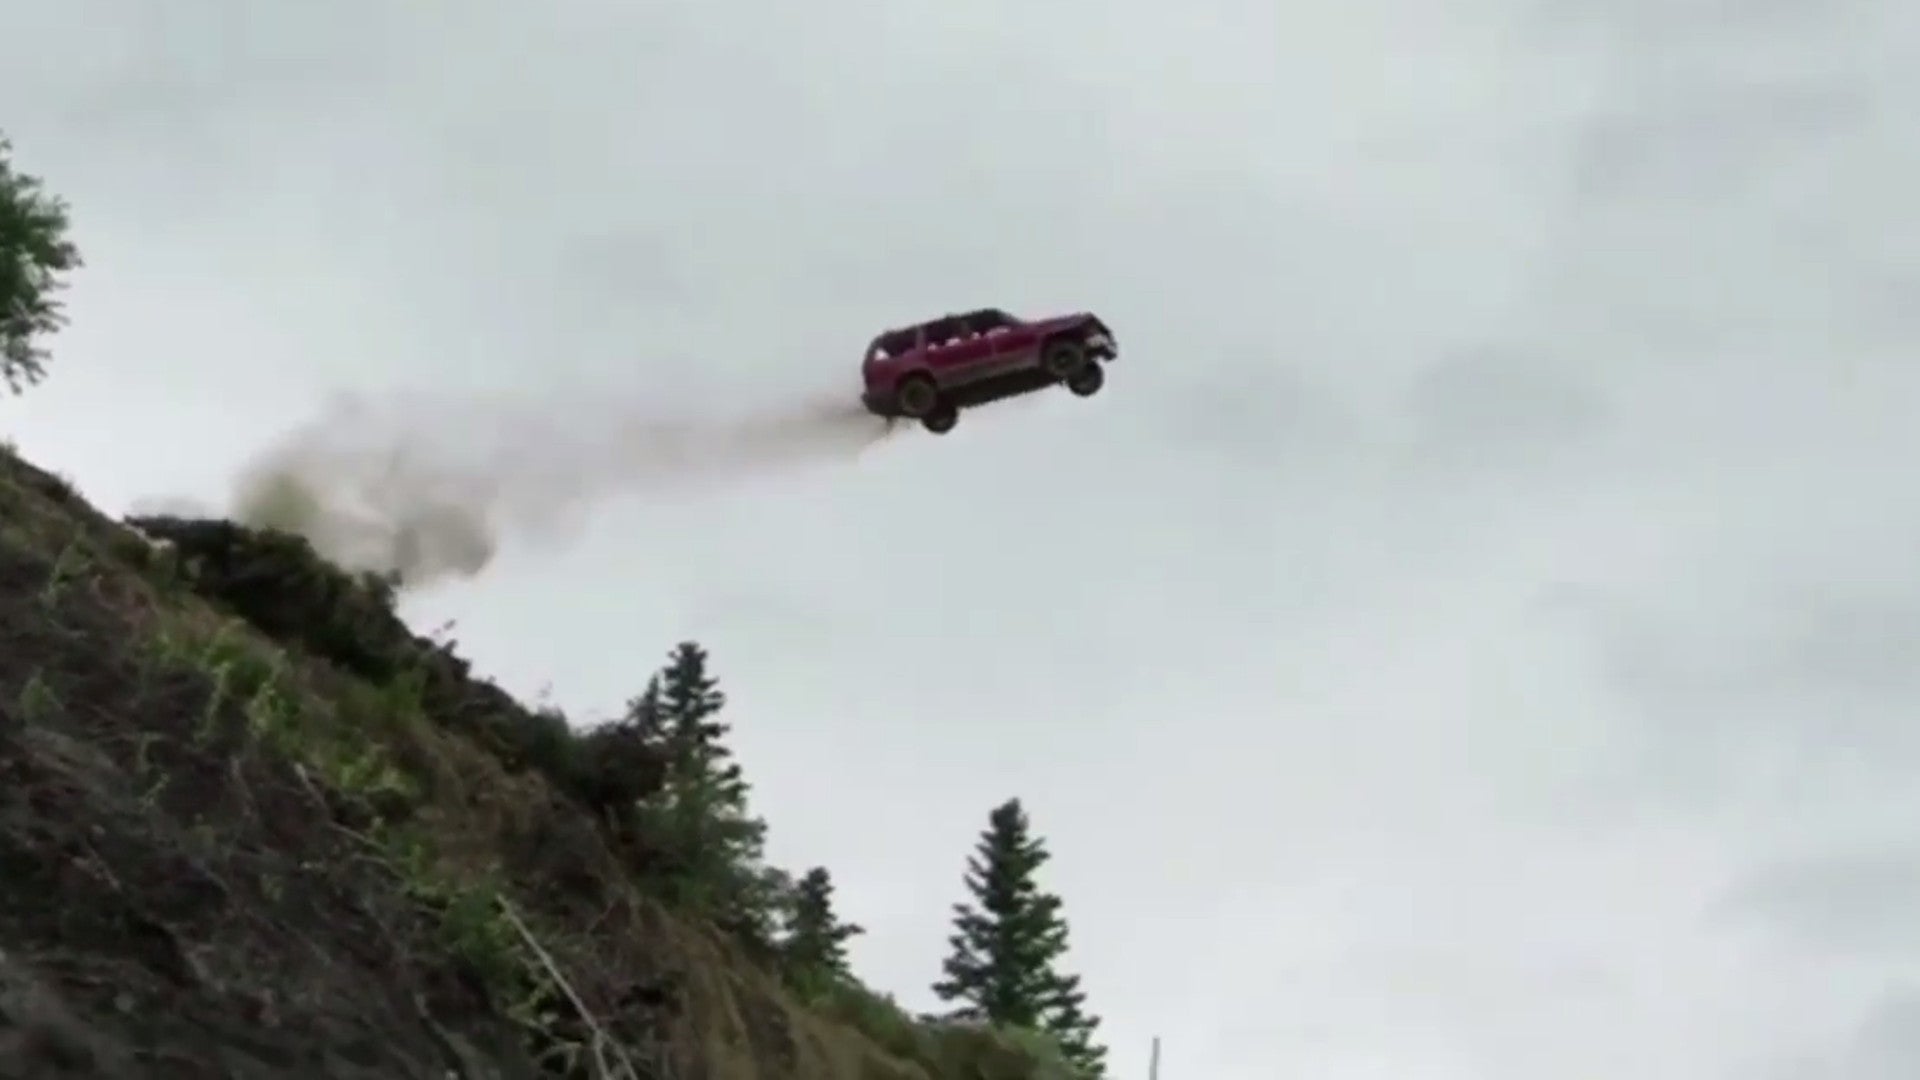 Going to crash. Машина на обрыве. Машина падает с горы. Машина падает с обрыва. Машина вылетает с горы.